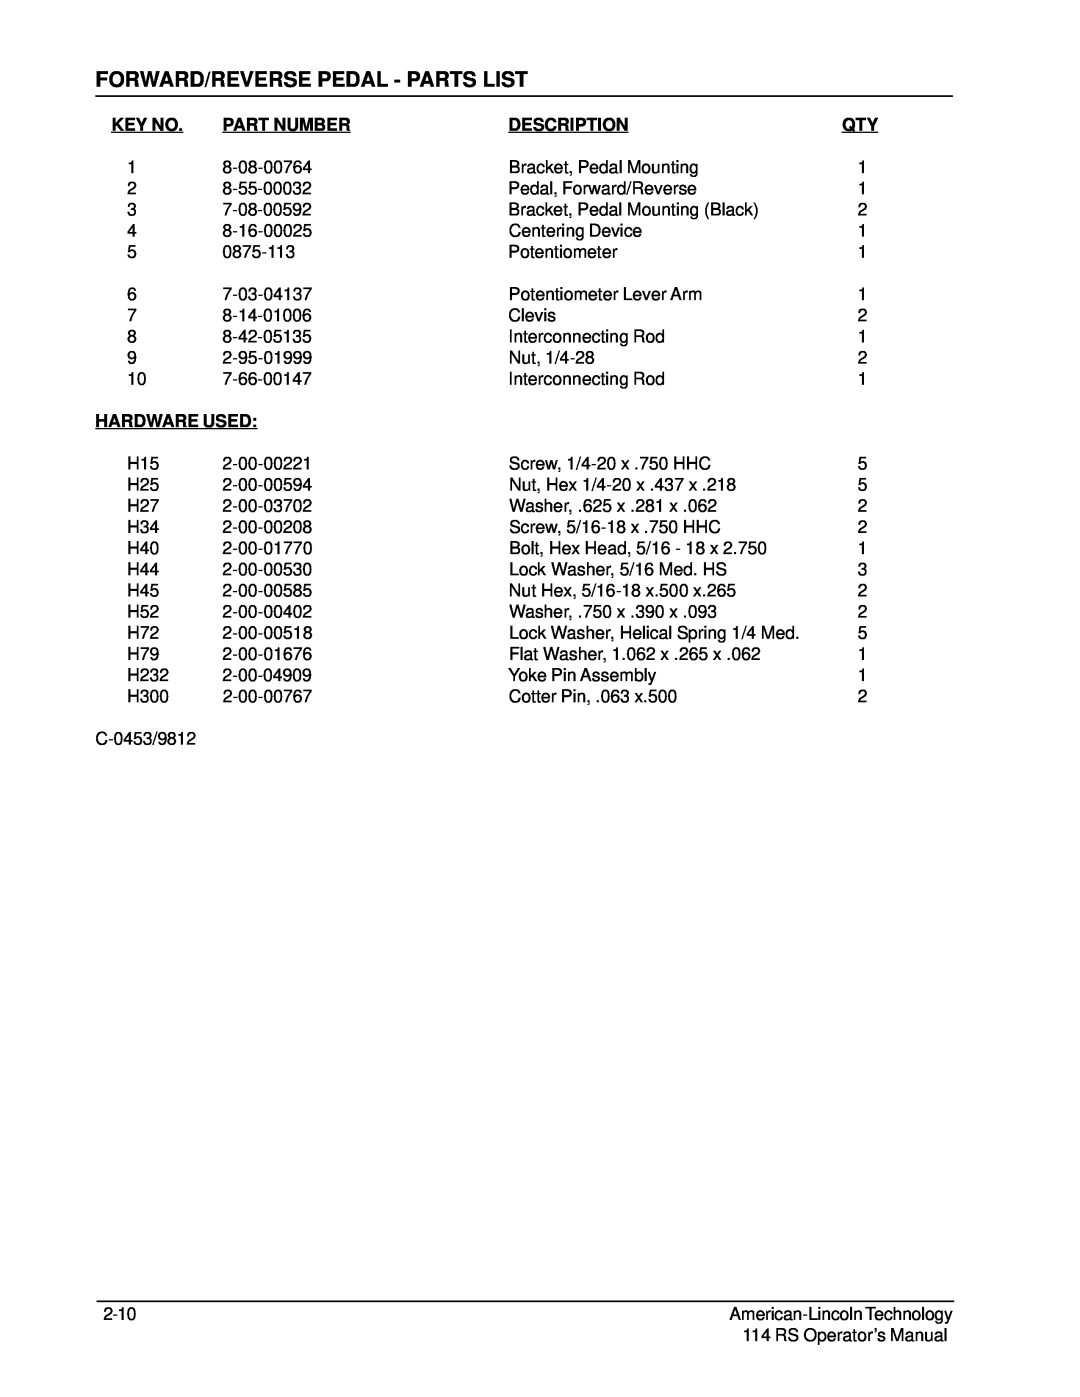 Nilfisk-ALTO 114RS SWEEPER manual Forward/Reverse Pedal - Parts List, Part Number, Description, Hardware Used 